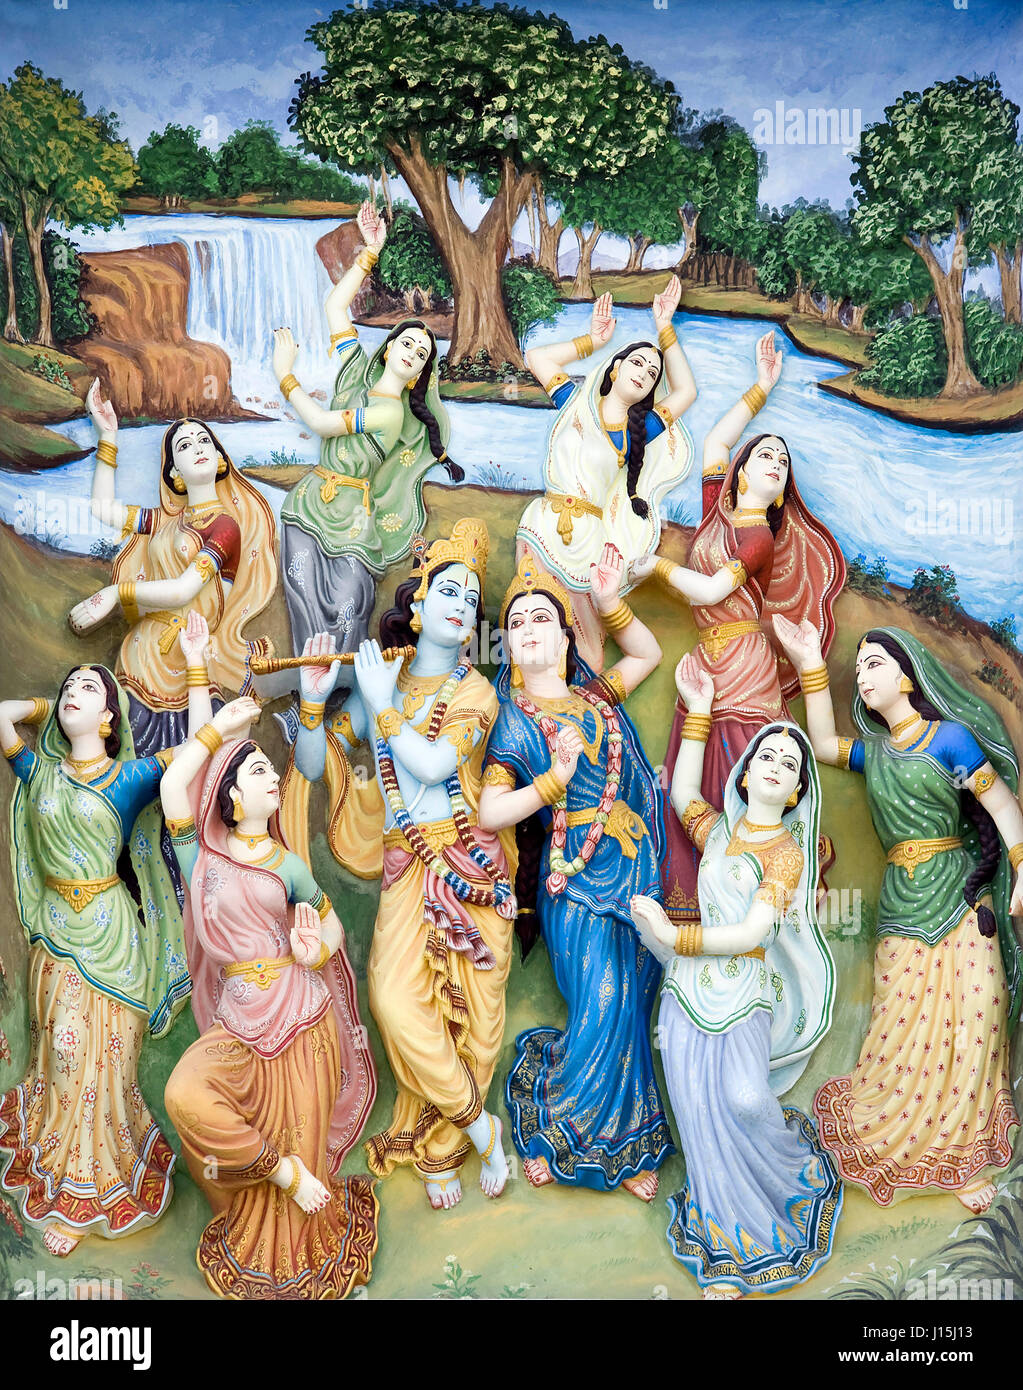 Radha krishna gopis dipinti su parete, Uttar Pradesh, India, Asia Foto Stock